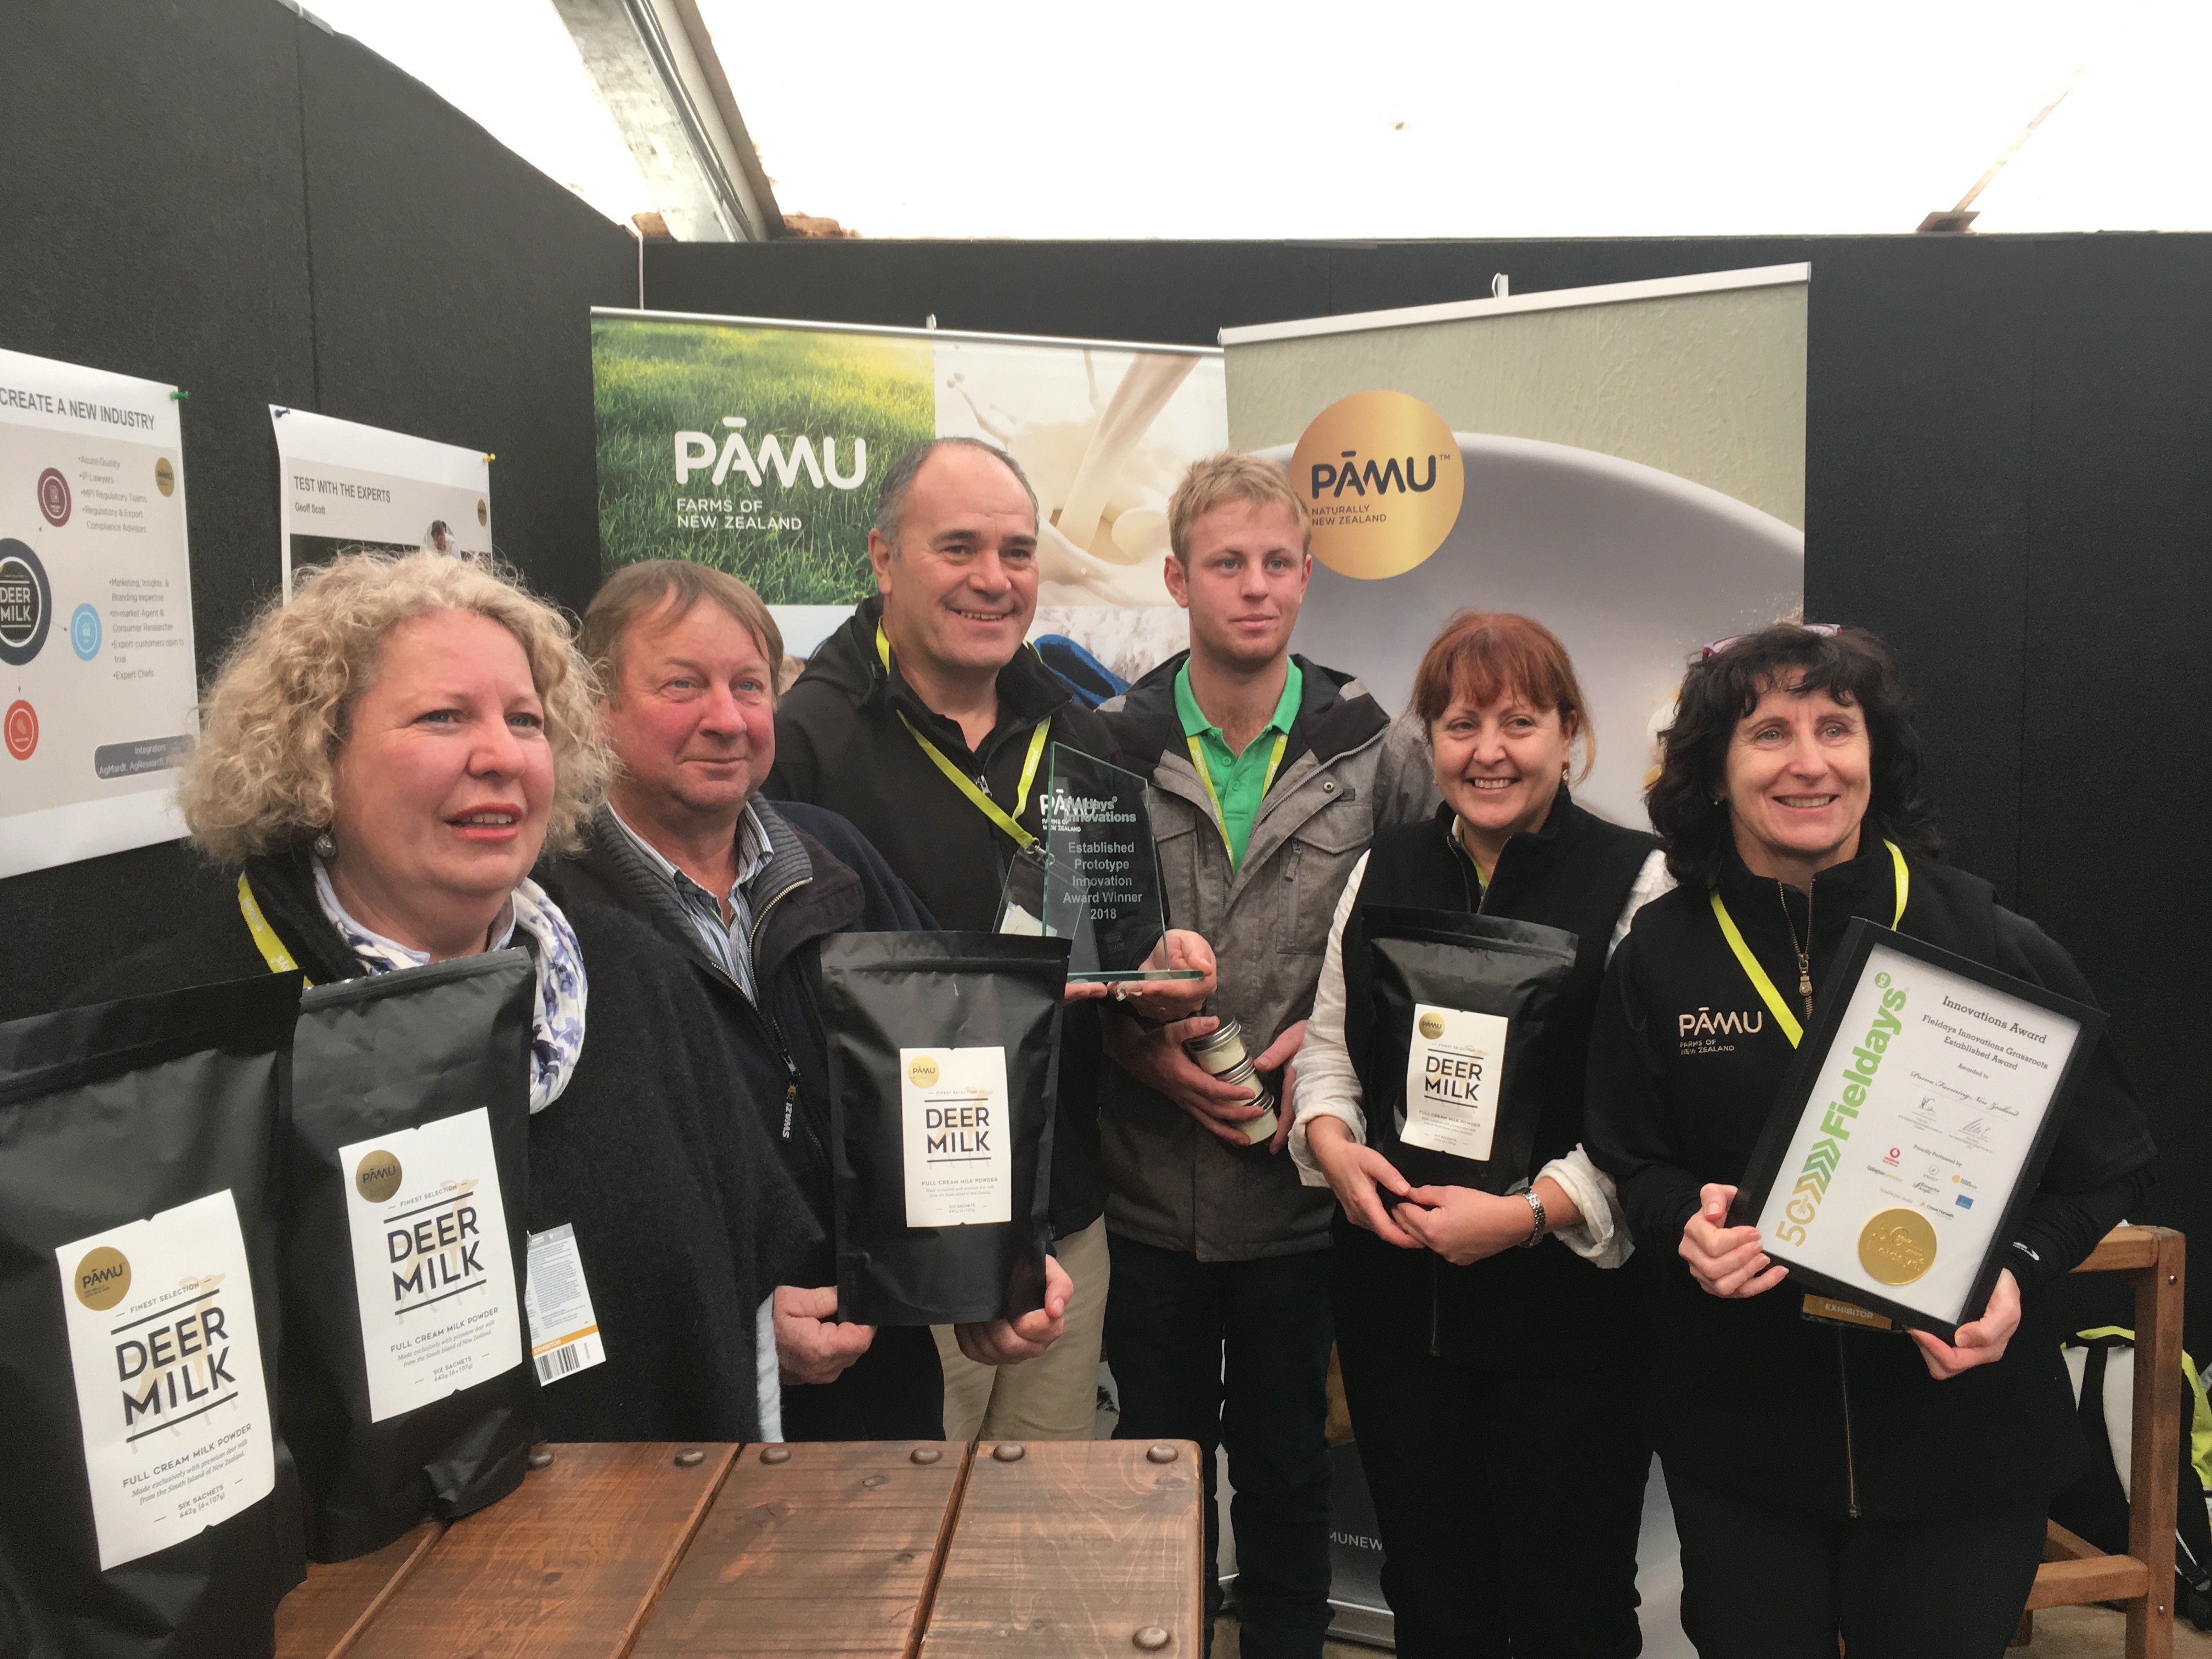 Pamu deer milk wins Innovation Award at Fieldays